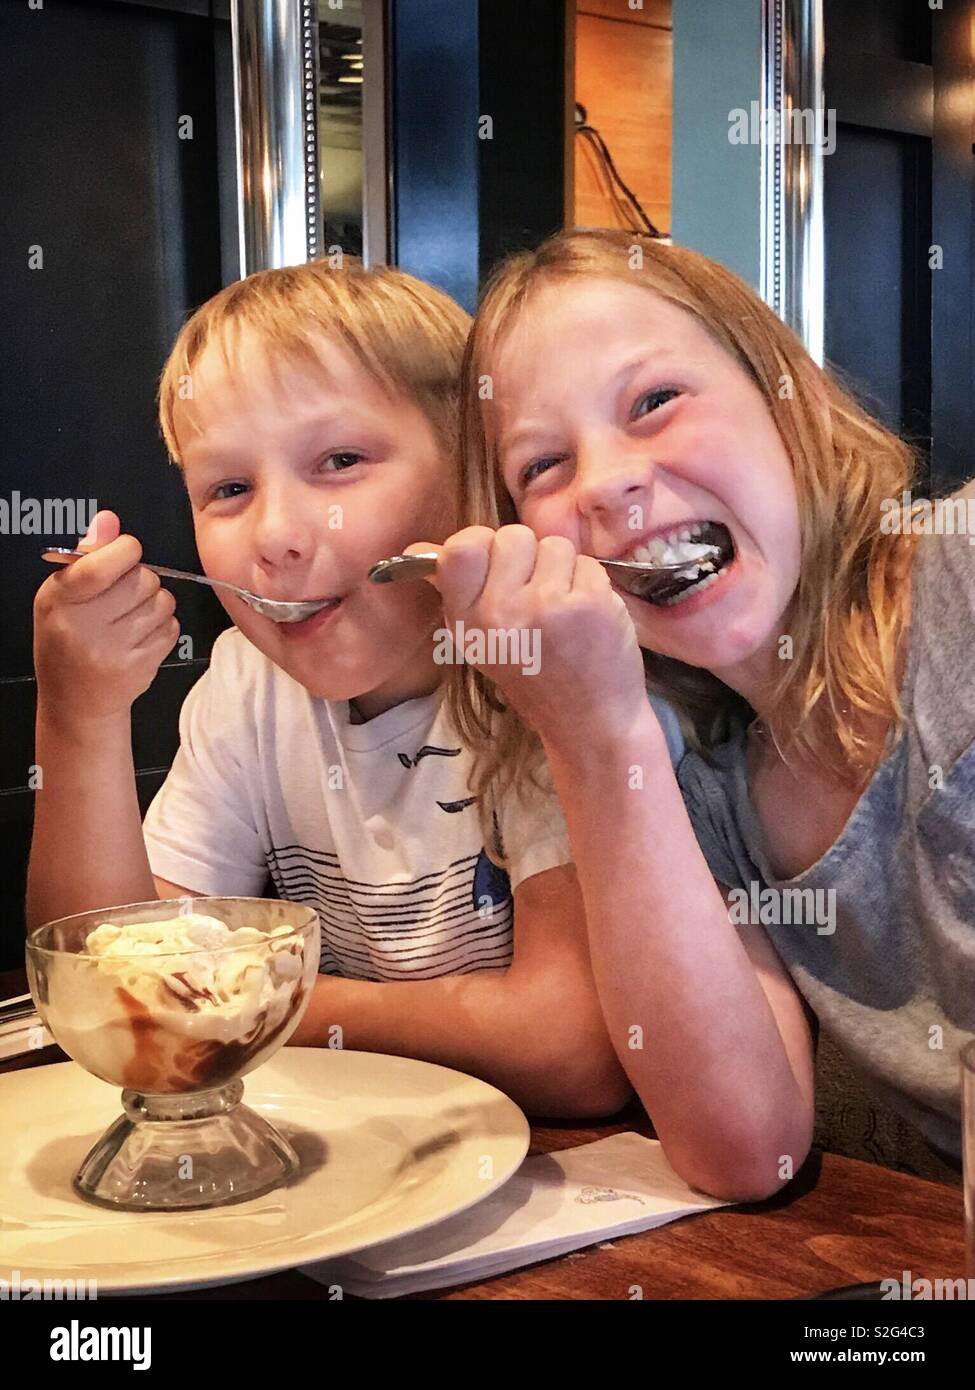 A boy and girl share an ice cream dessert. Stock Photo